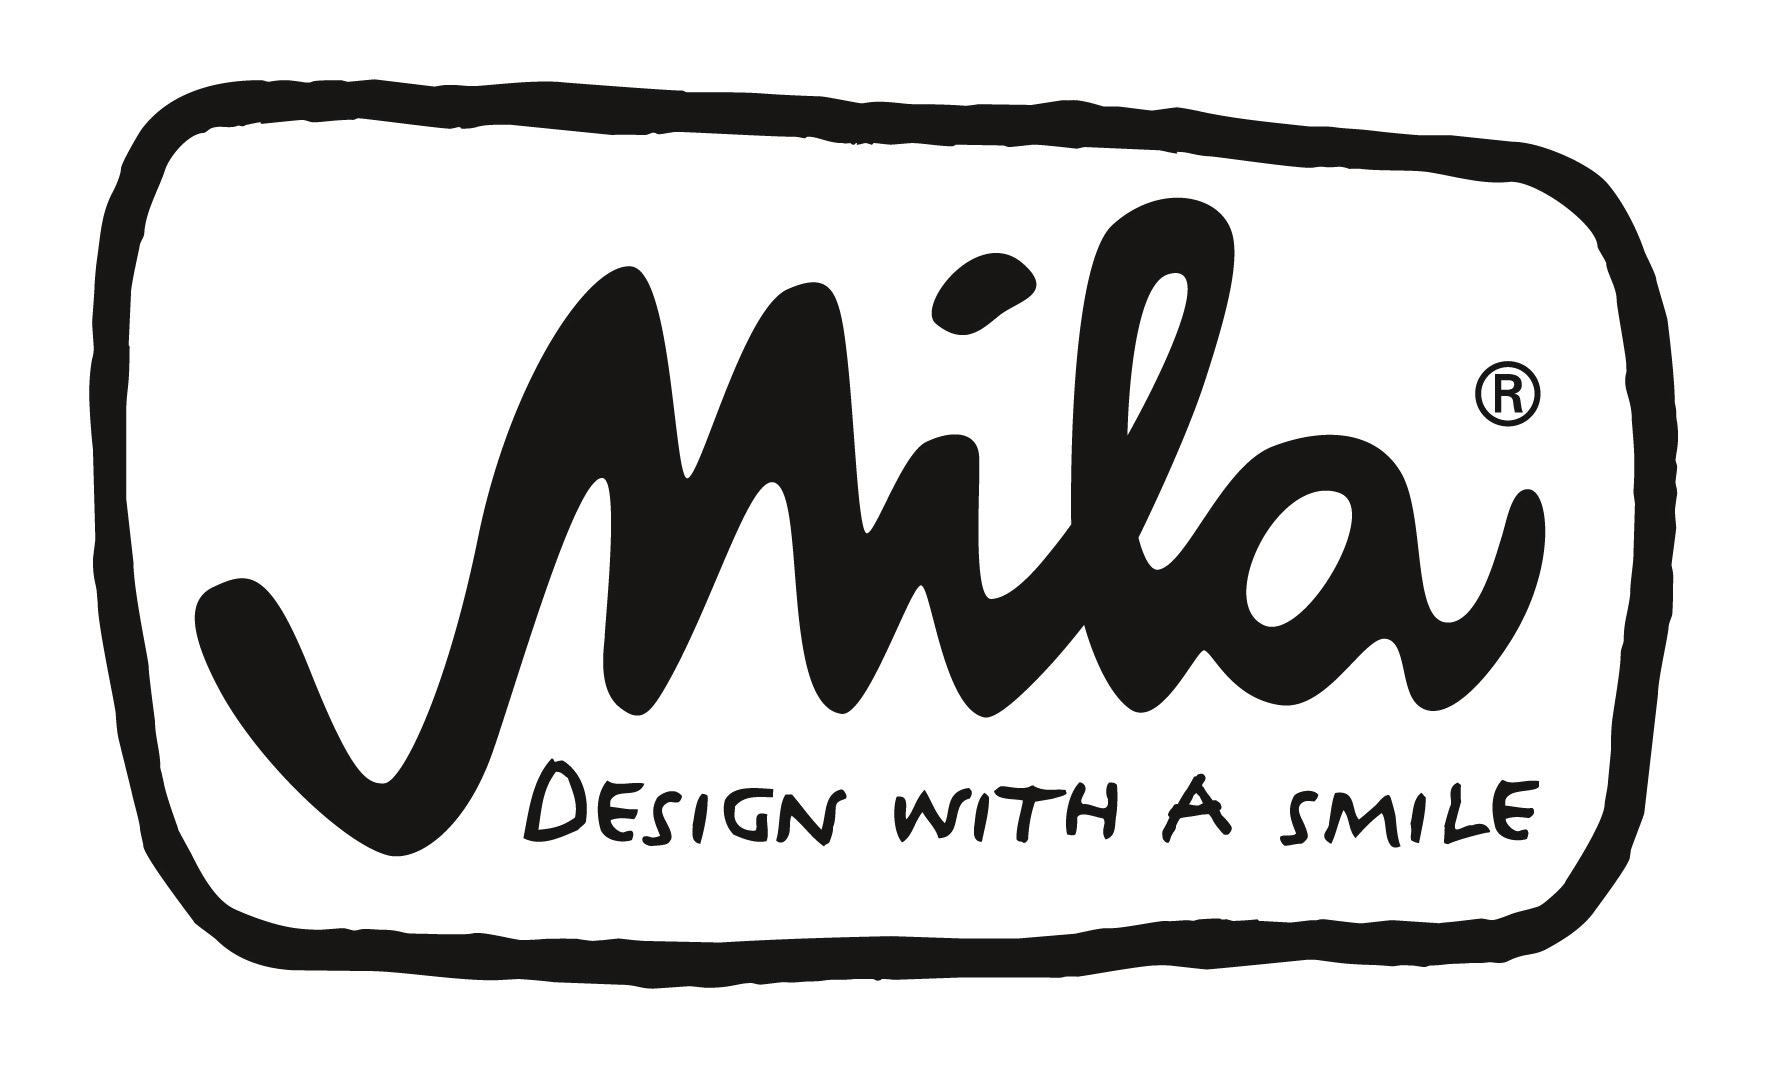 Logo Mila